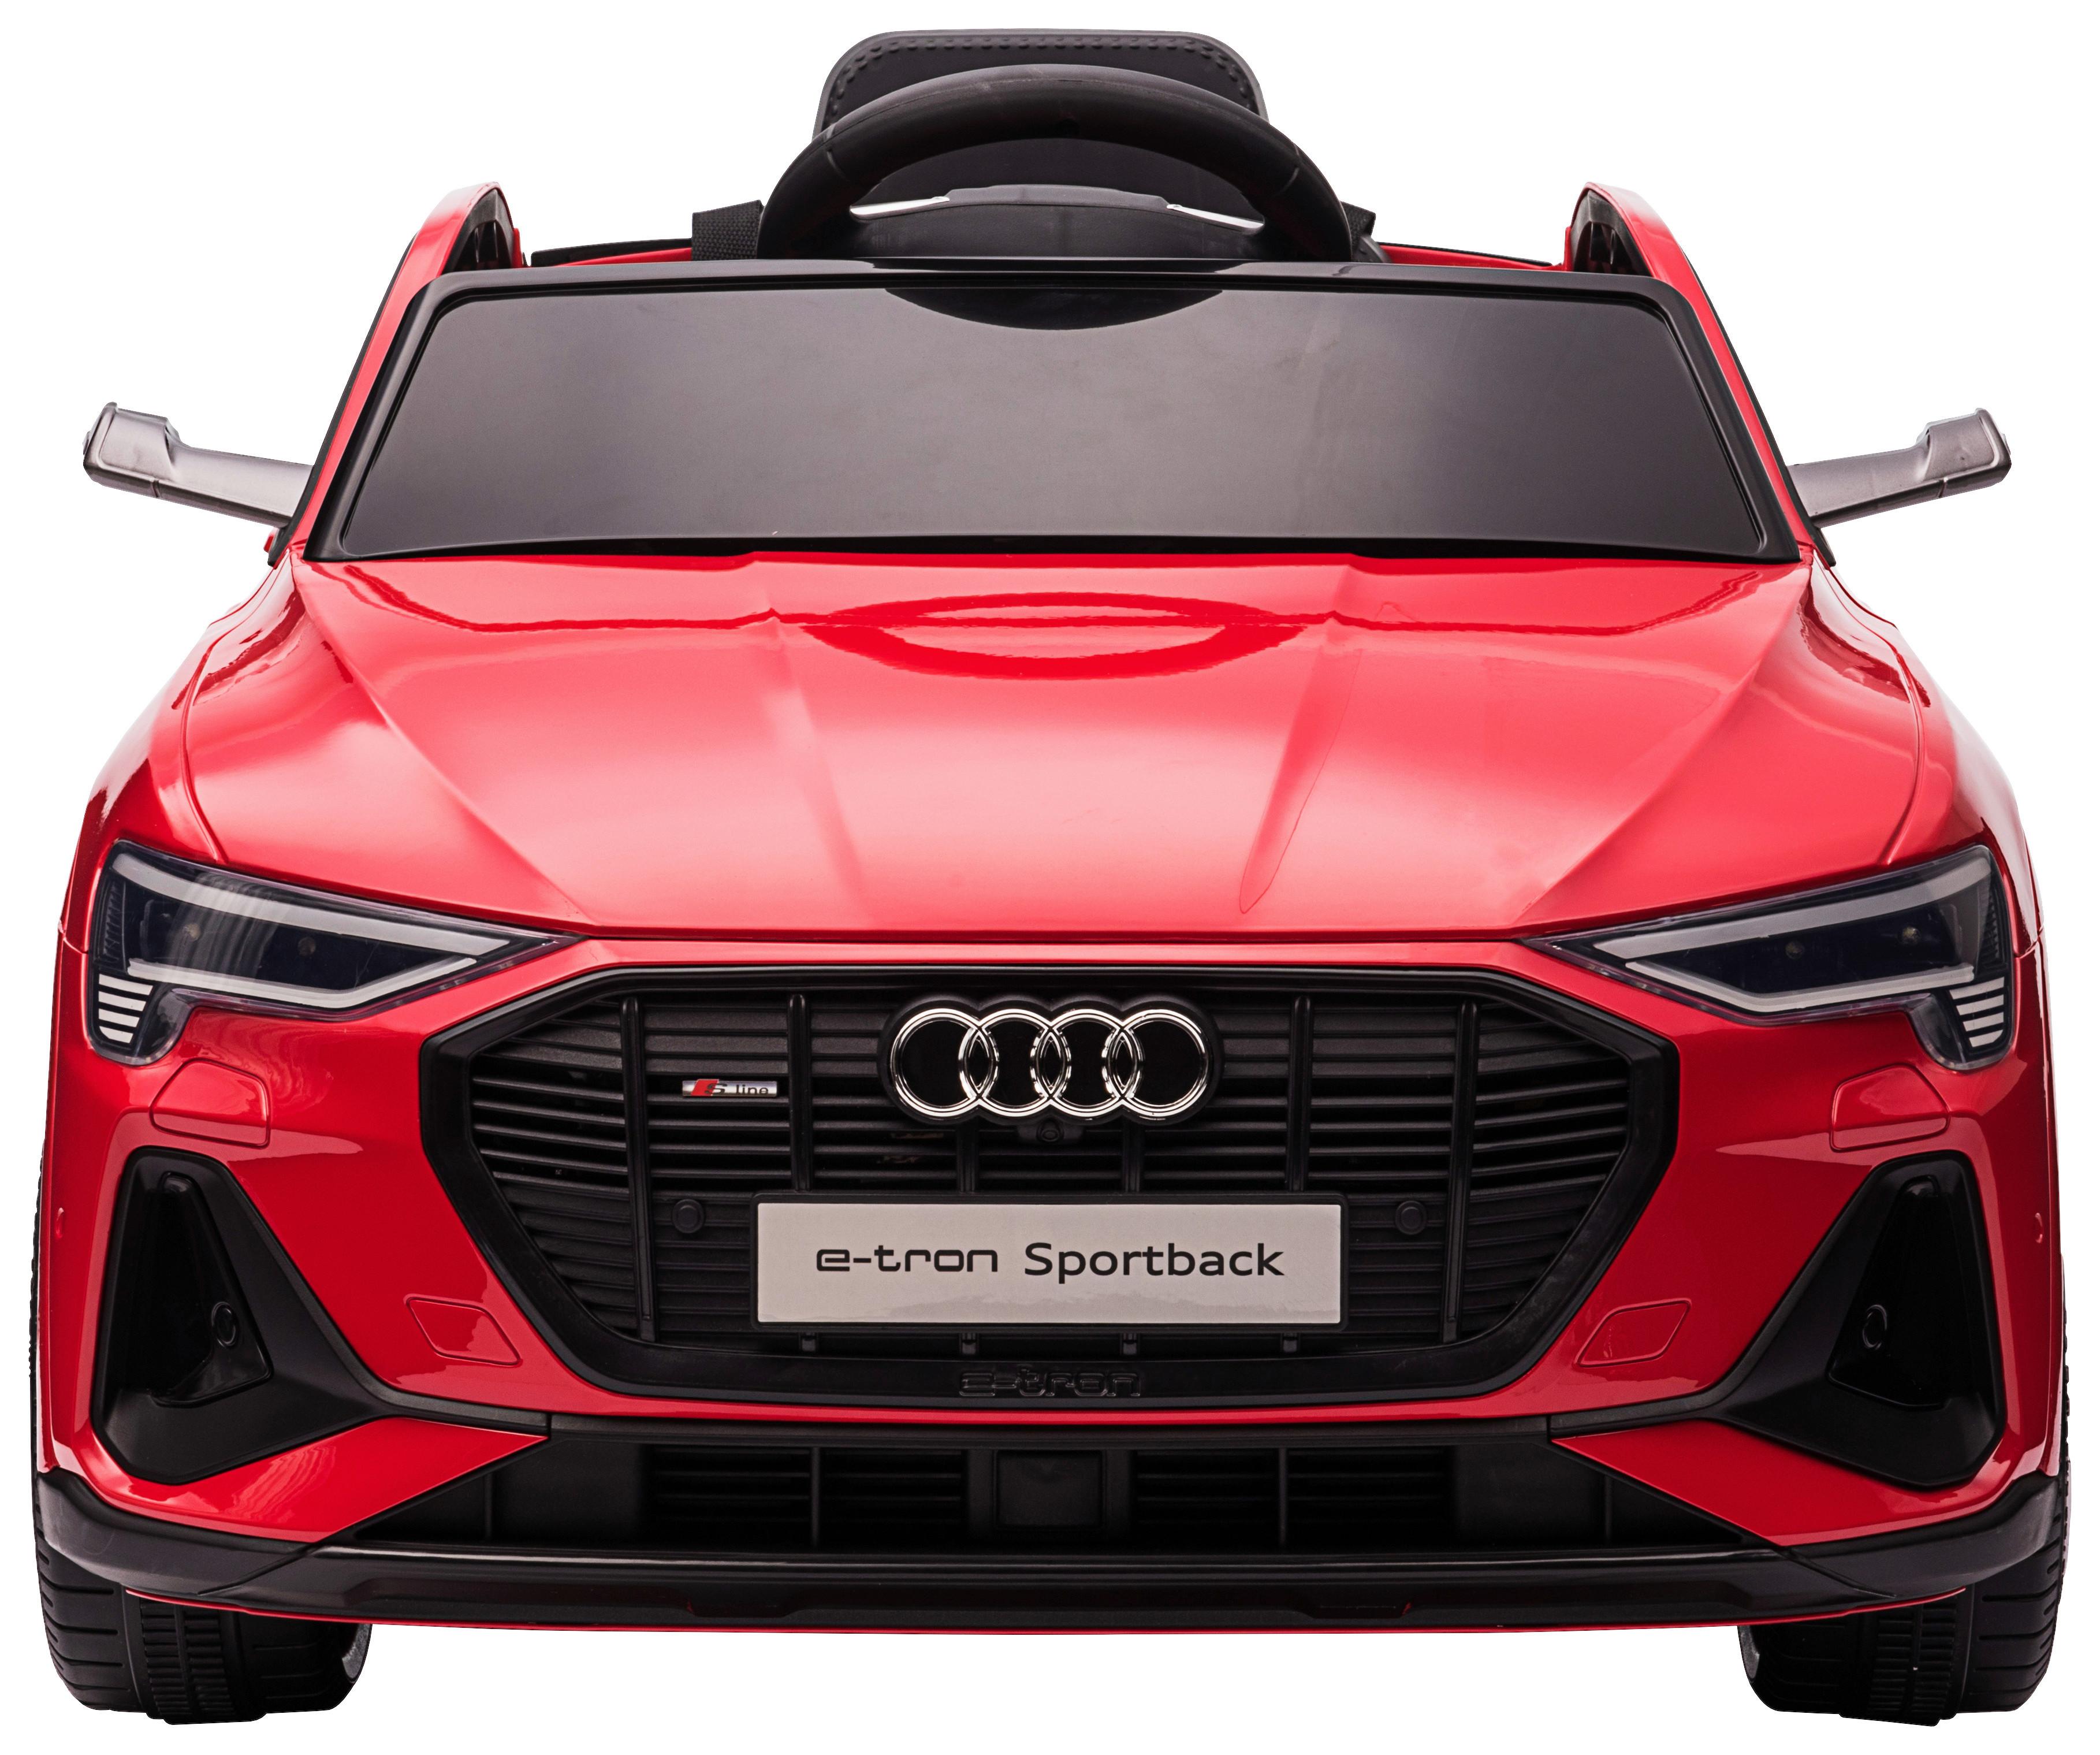 Kinder-Elektroauto Audi E-Tron Sportback Rot mit Licht/Sound - Rot, Basics, Kunststoff (108/60/47cm)